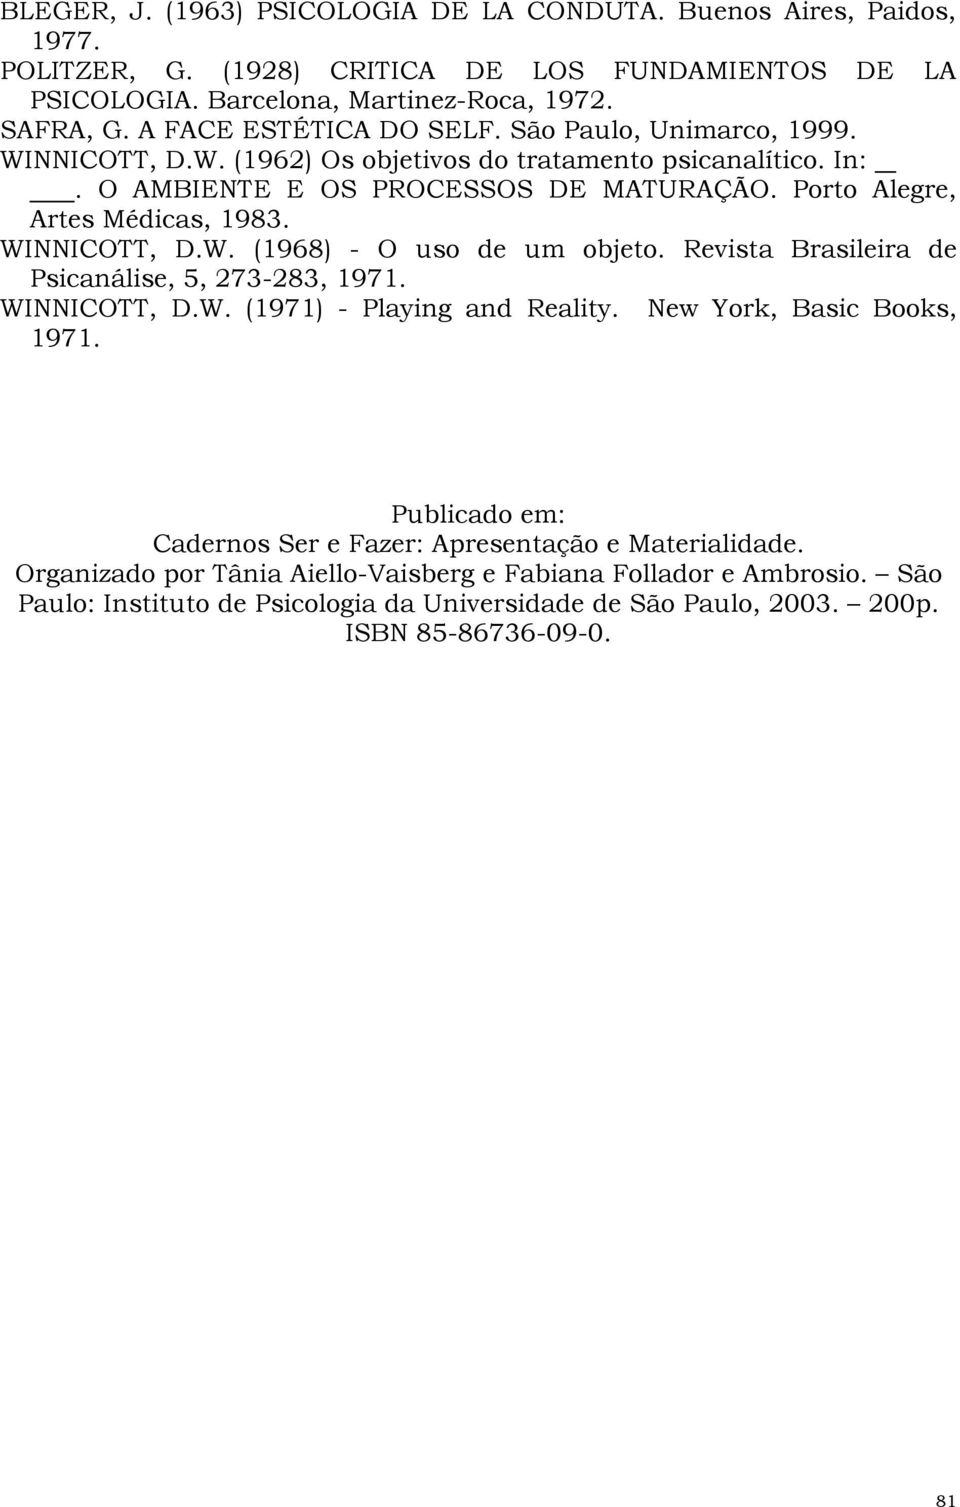 WINNICOTT, D.W. (1968) - O uso de um objeto. Revista Brasileira de Psicanálise, 5, 273-283, 1971. WINNICOTT, D.W. (1971) - Playing and Reality. New York, Basic Books, 1971.